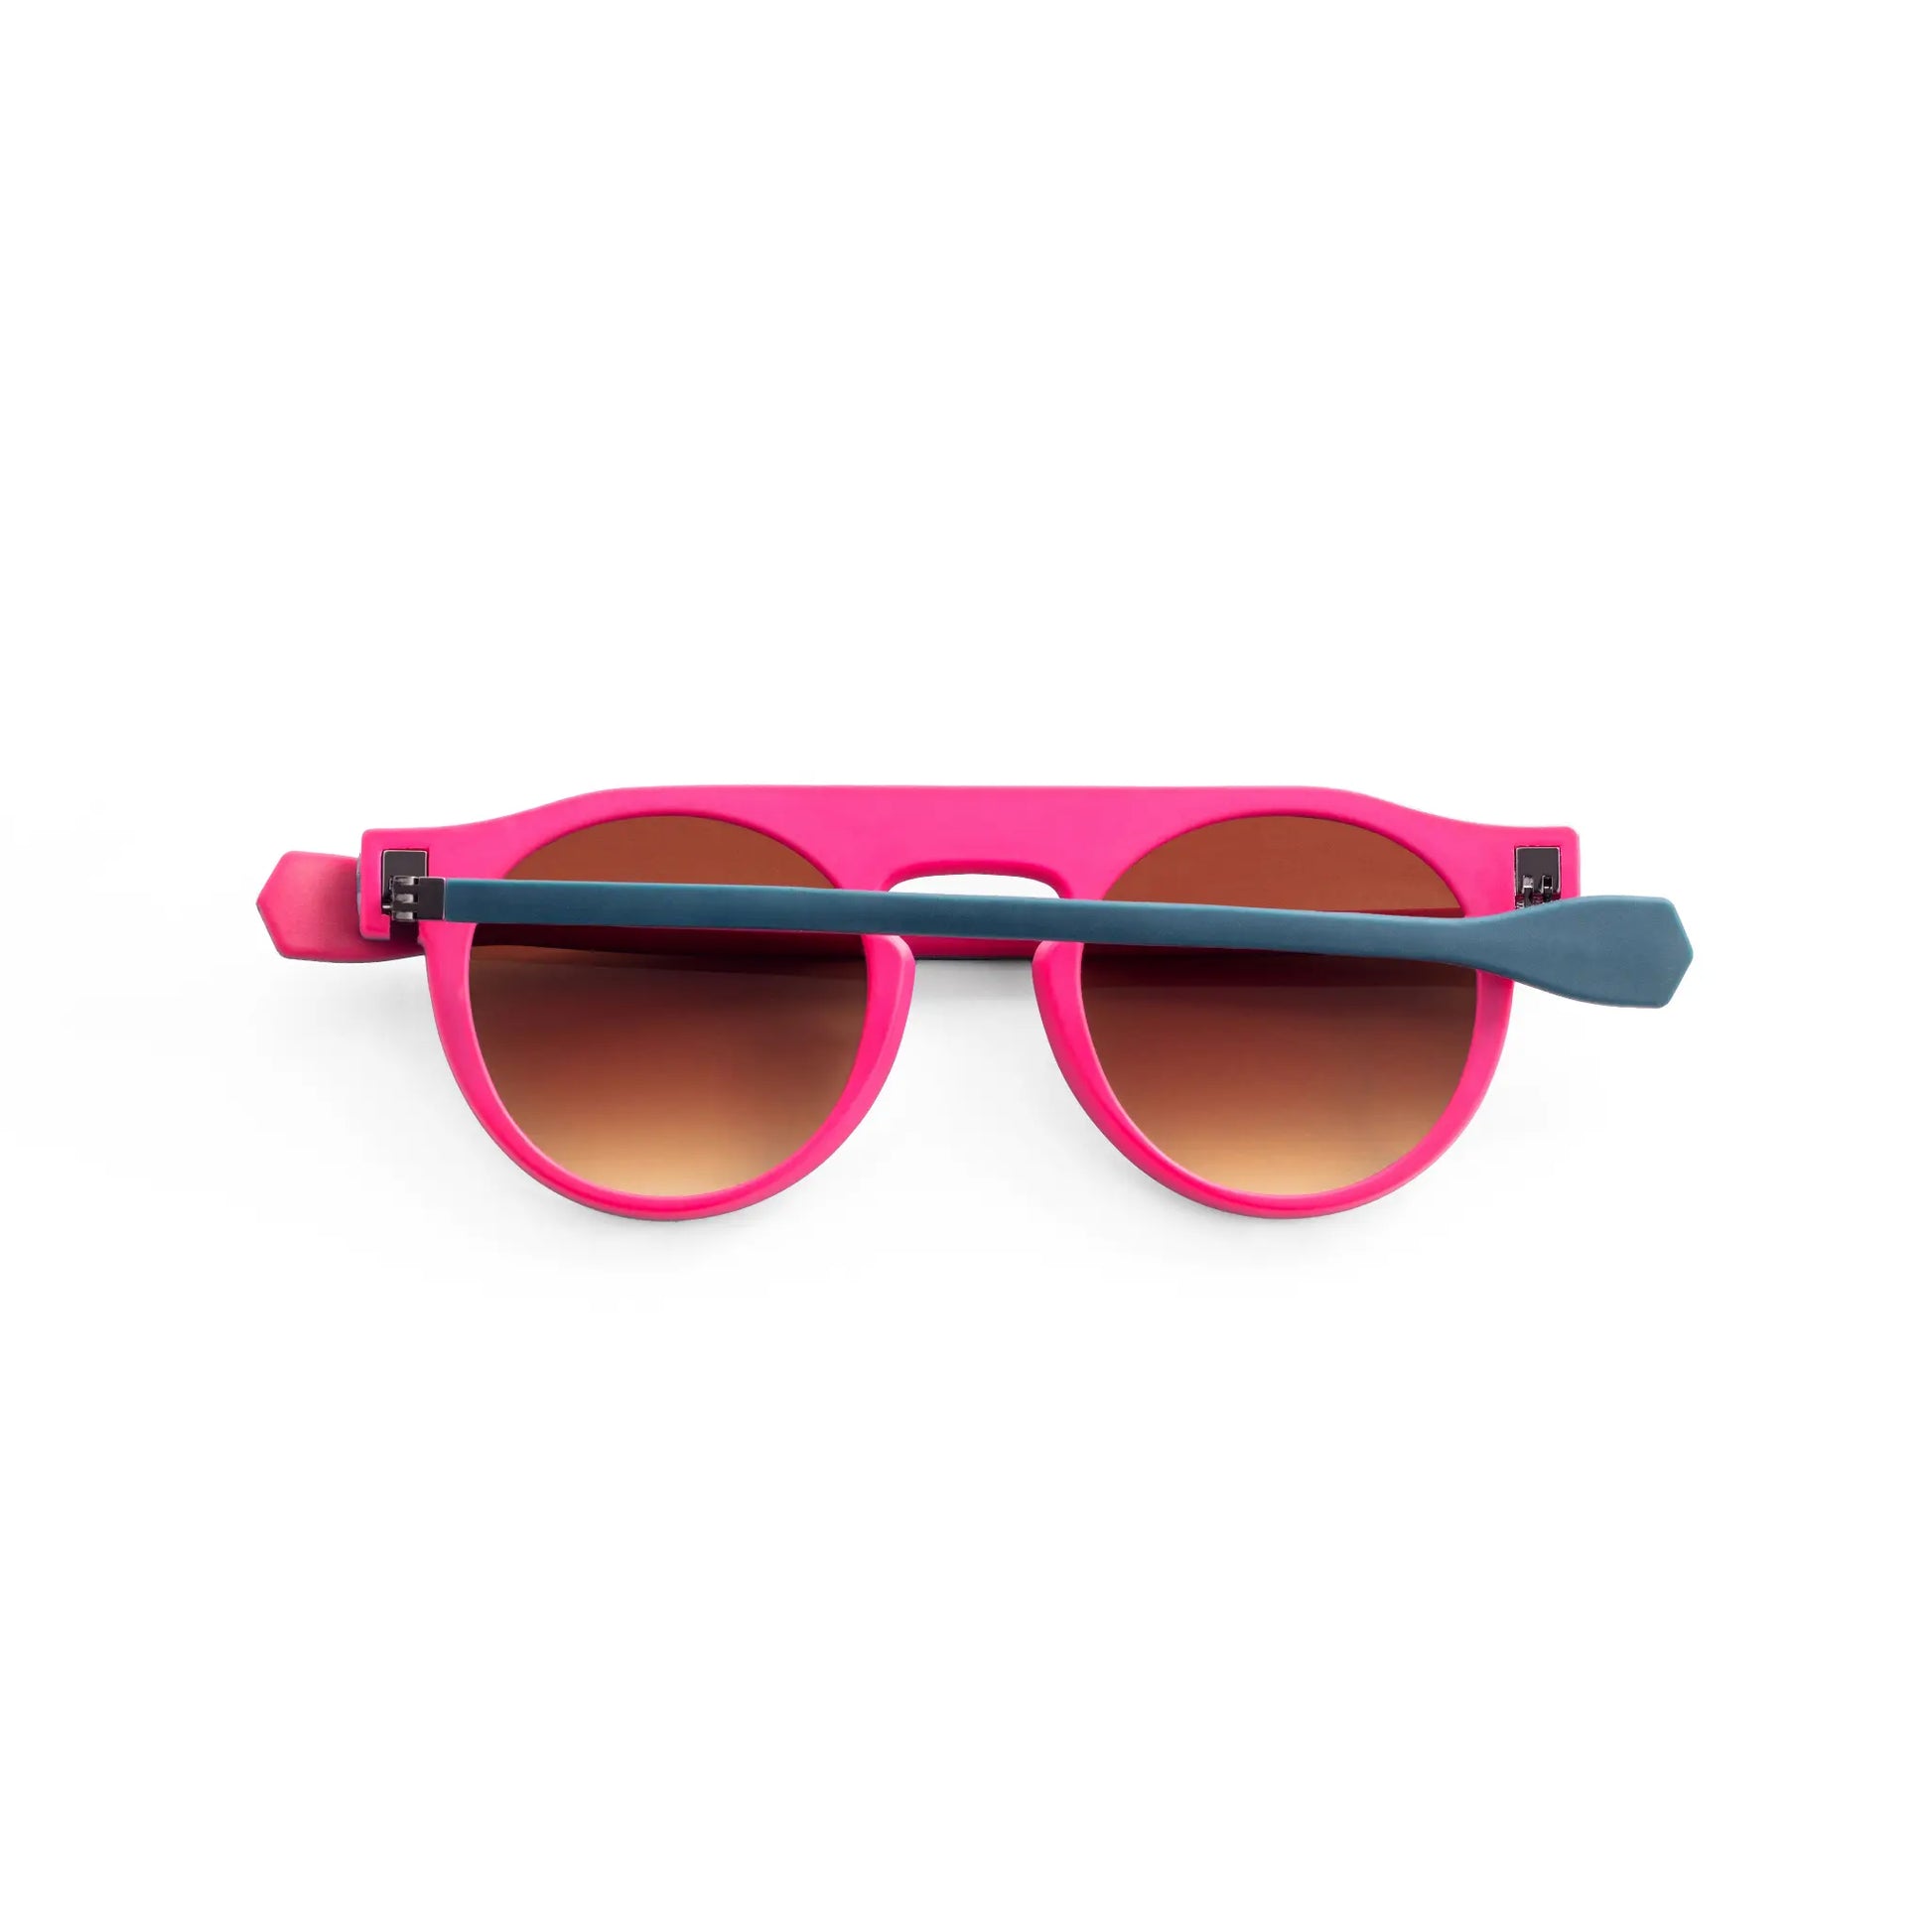 Reverso sunglasses pink & petrol reversible & ultra light back view